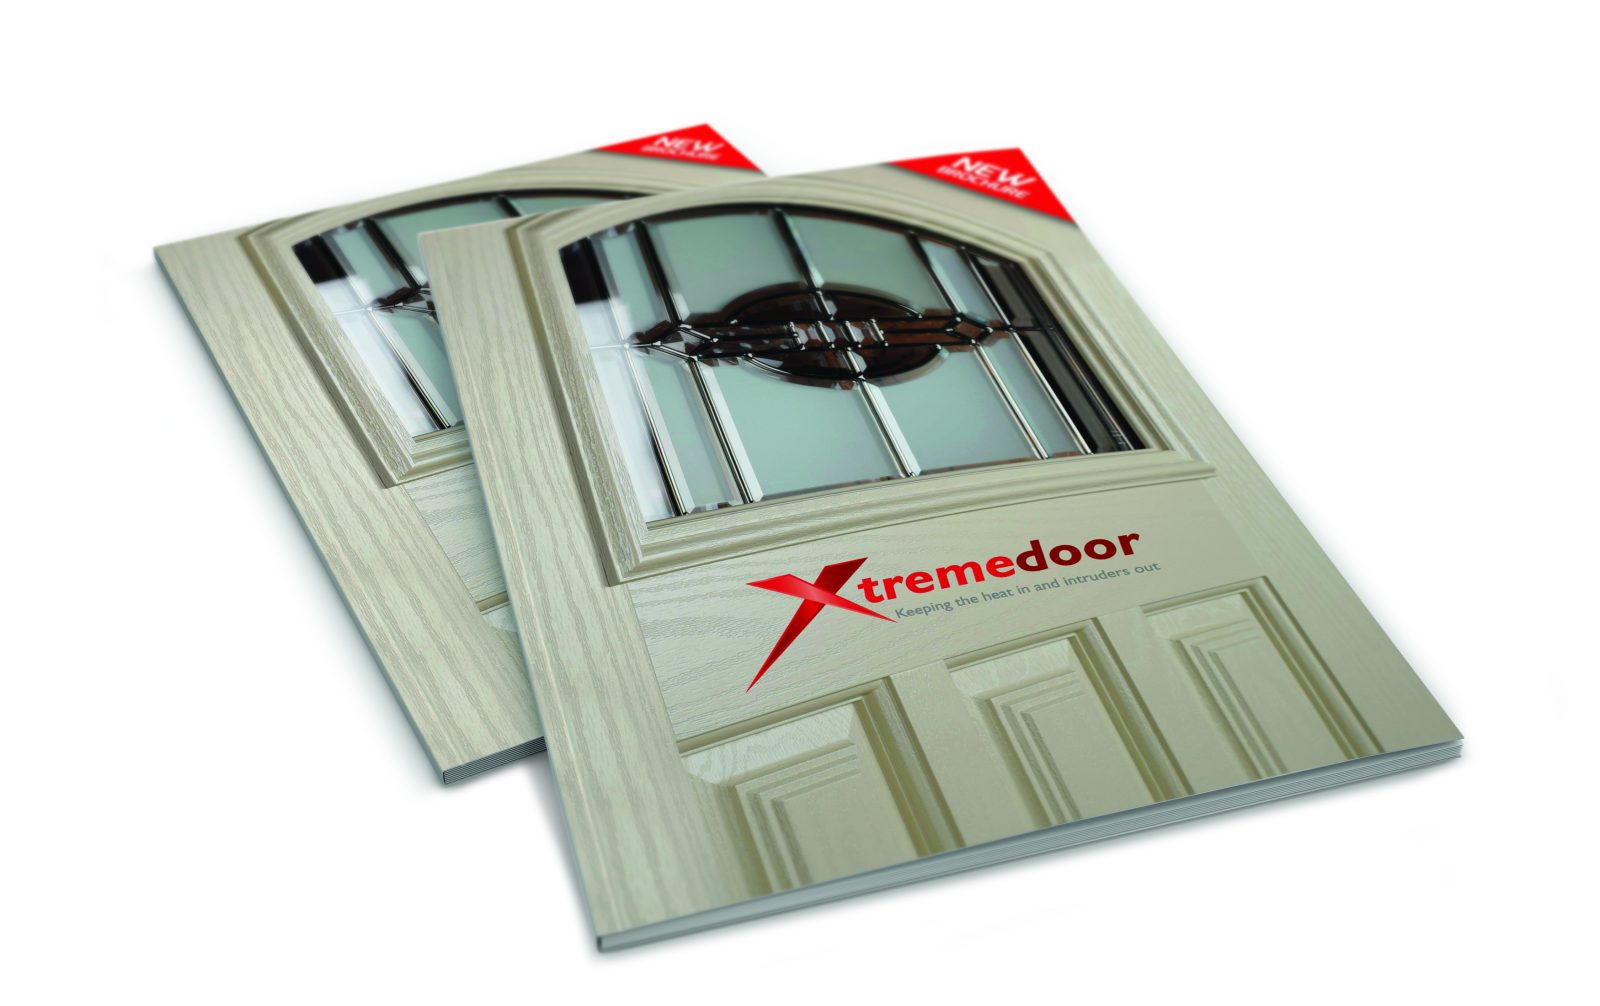 Award-winning composite door supplier Vista Panels has launched a brand new brochure for XtremeDoor, its market-leading composite door brand.